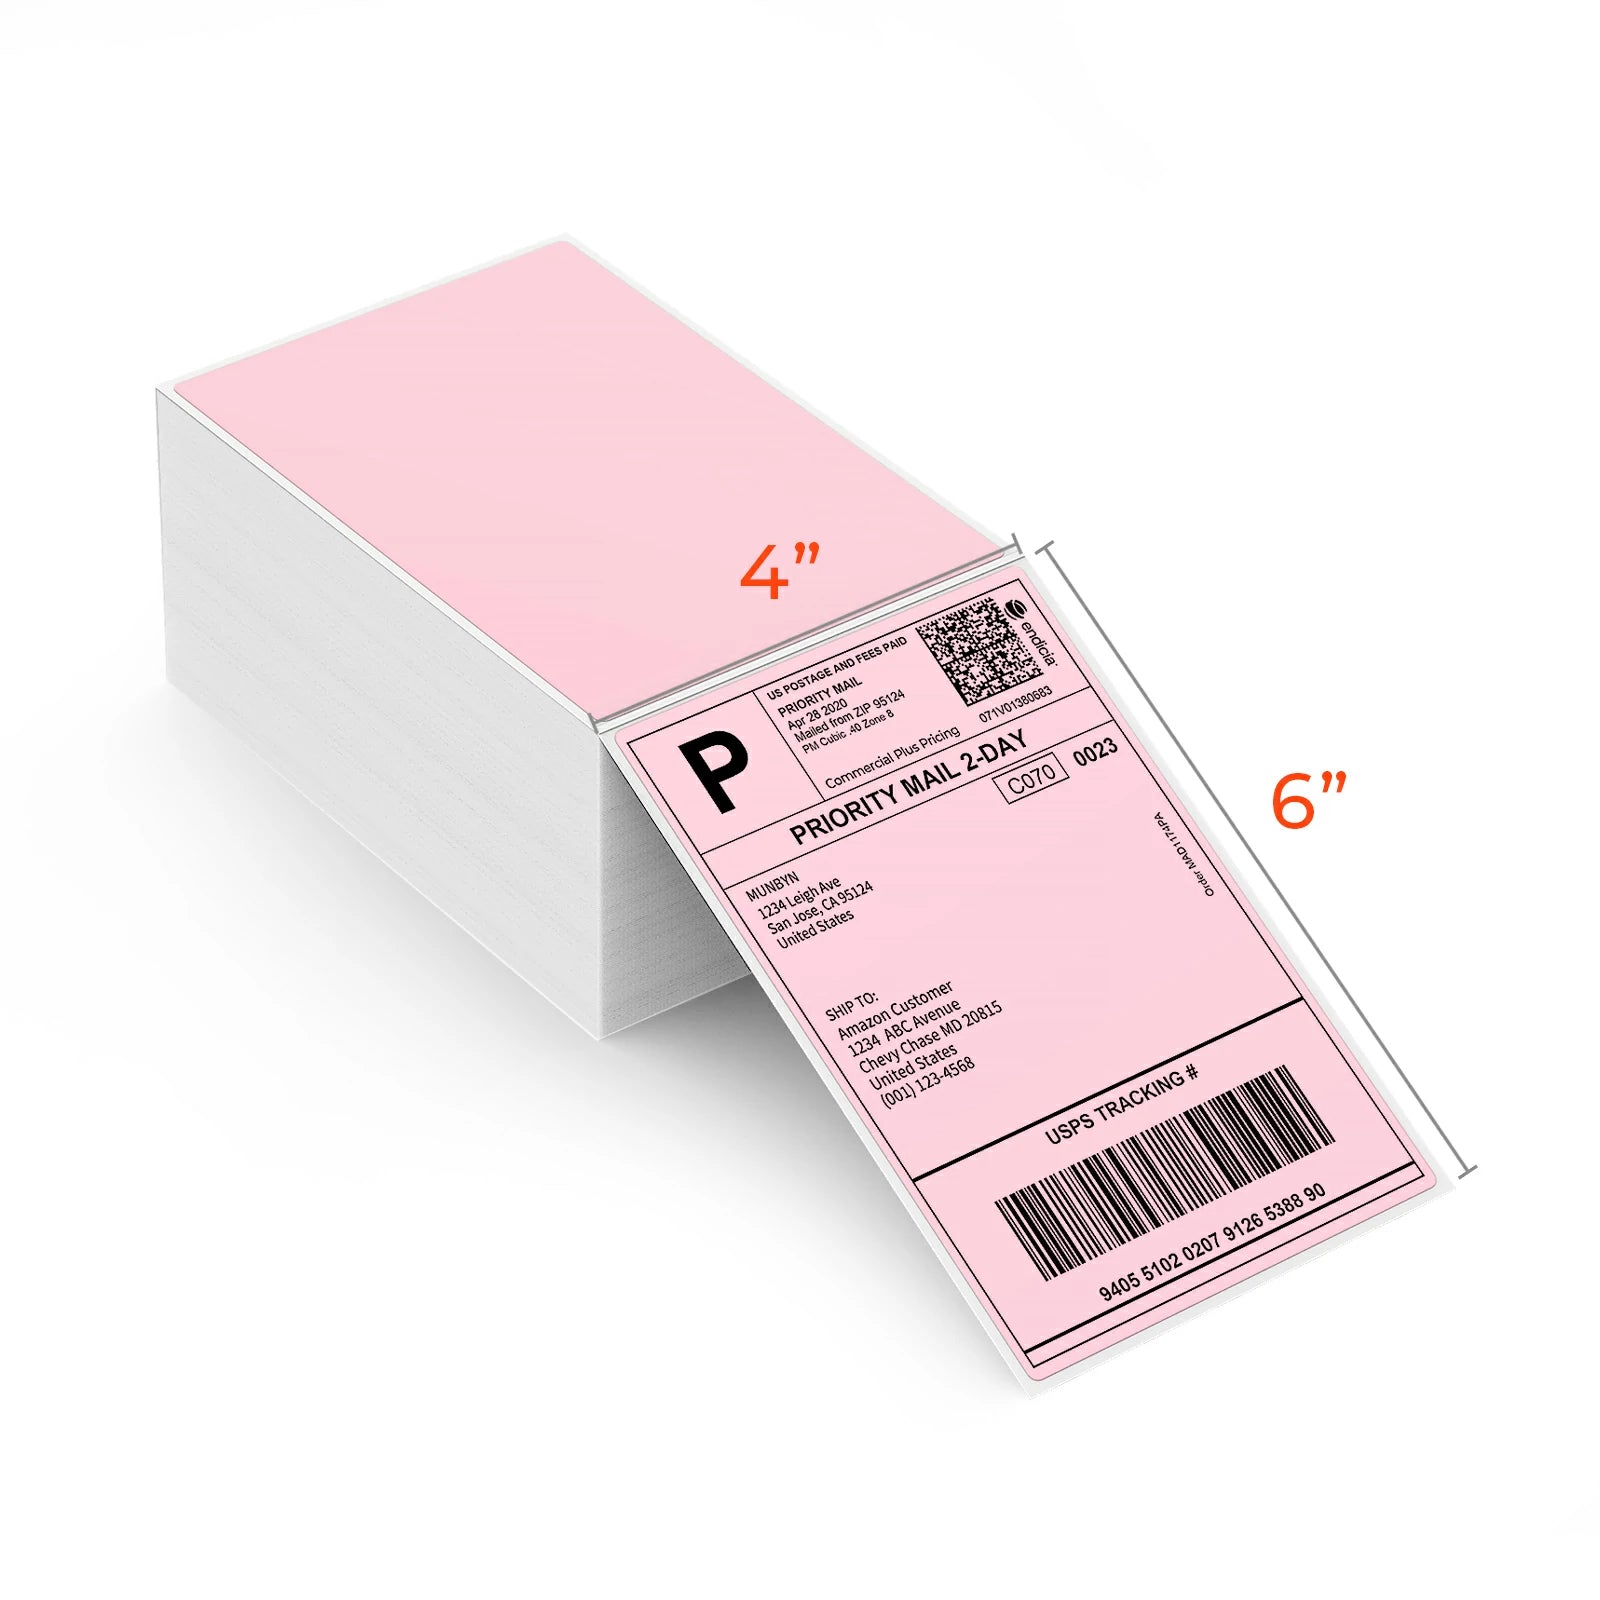 MUNBYN Pink Shipping Label Printer, [Upgraded 2.0] USB Label Printer Maker  for Shipping Packages Labels 4x6 Thermal Printer